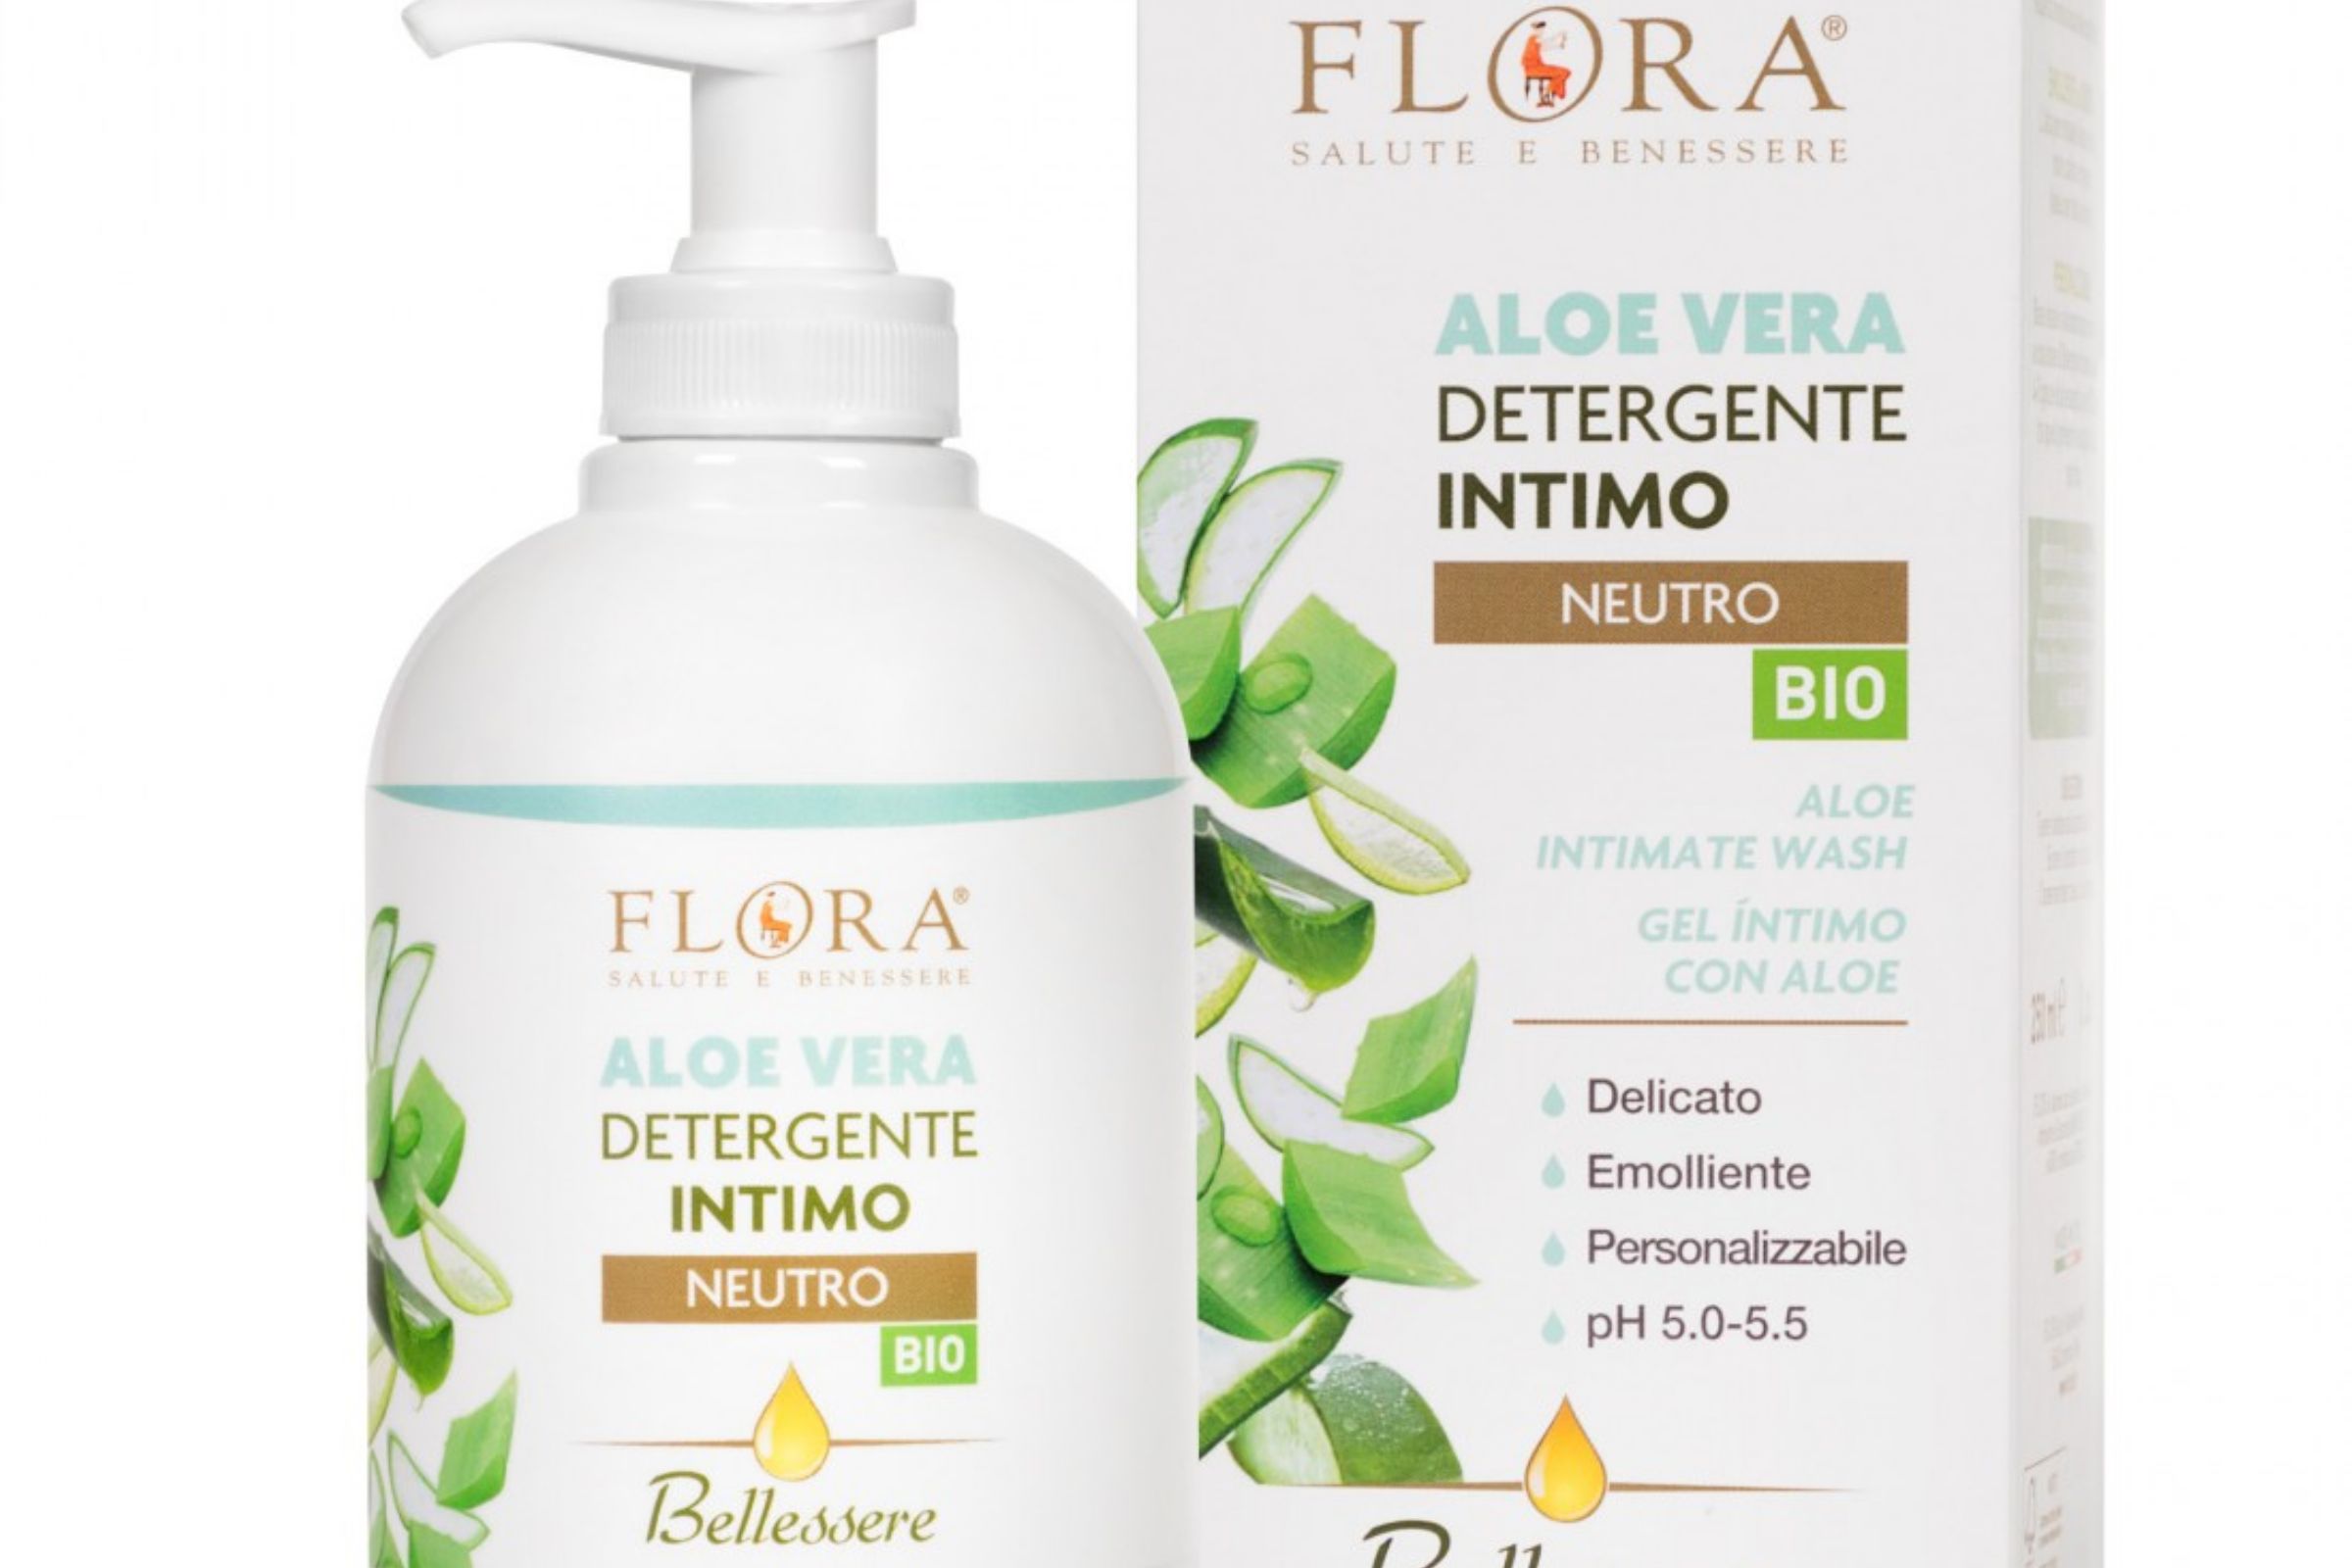 Detergente Intimo Aloe Vera, pH 5.0 - 5.5